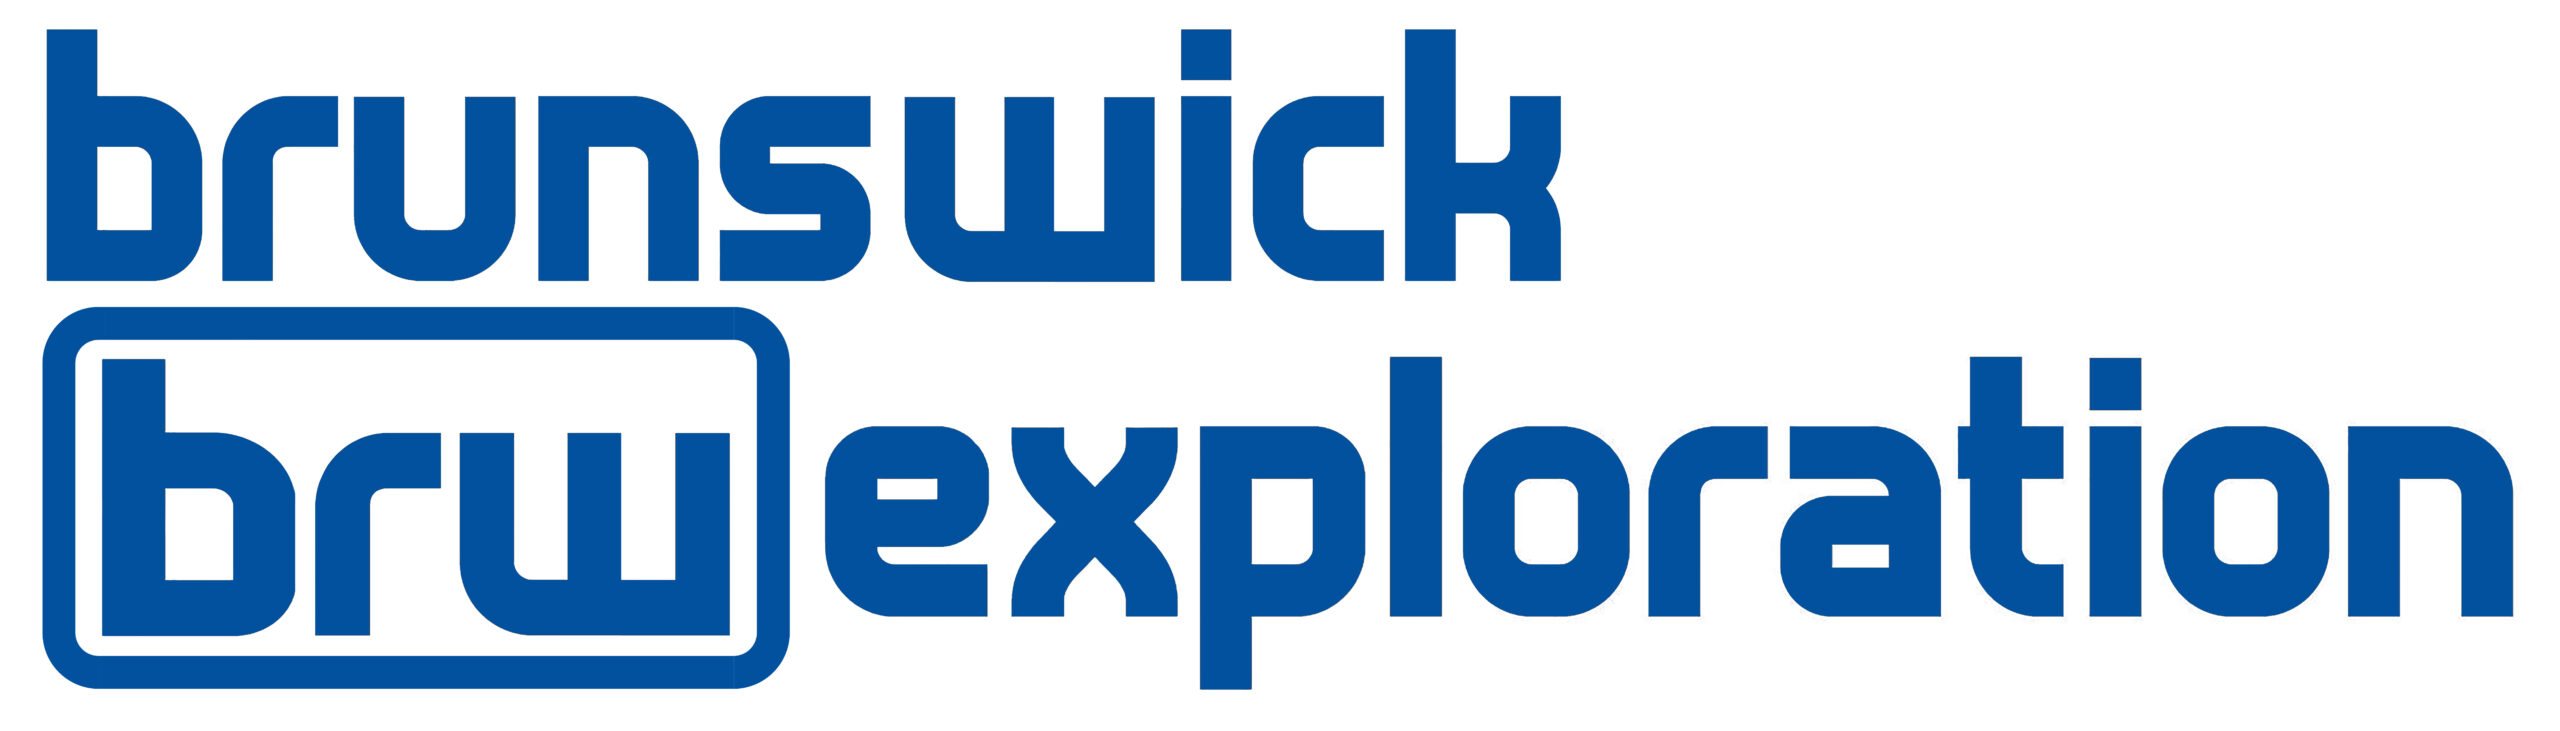 Brunswick-Logo-scaled.jpg